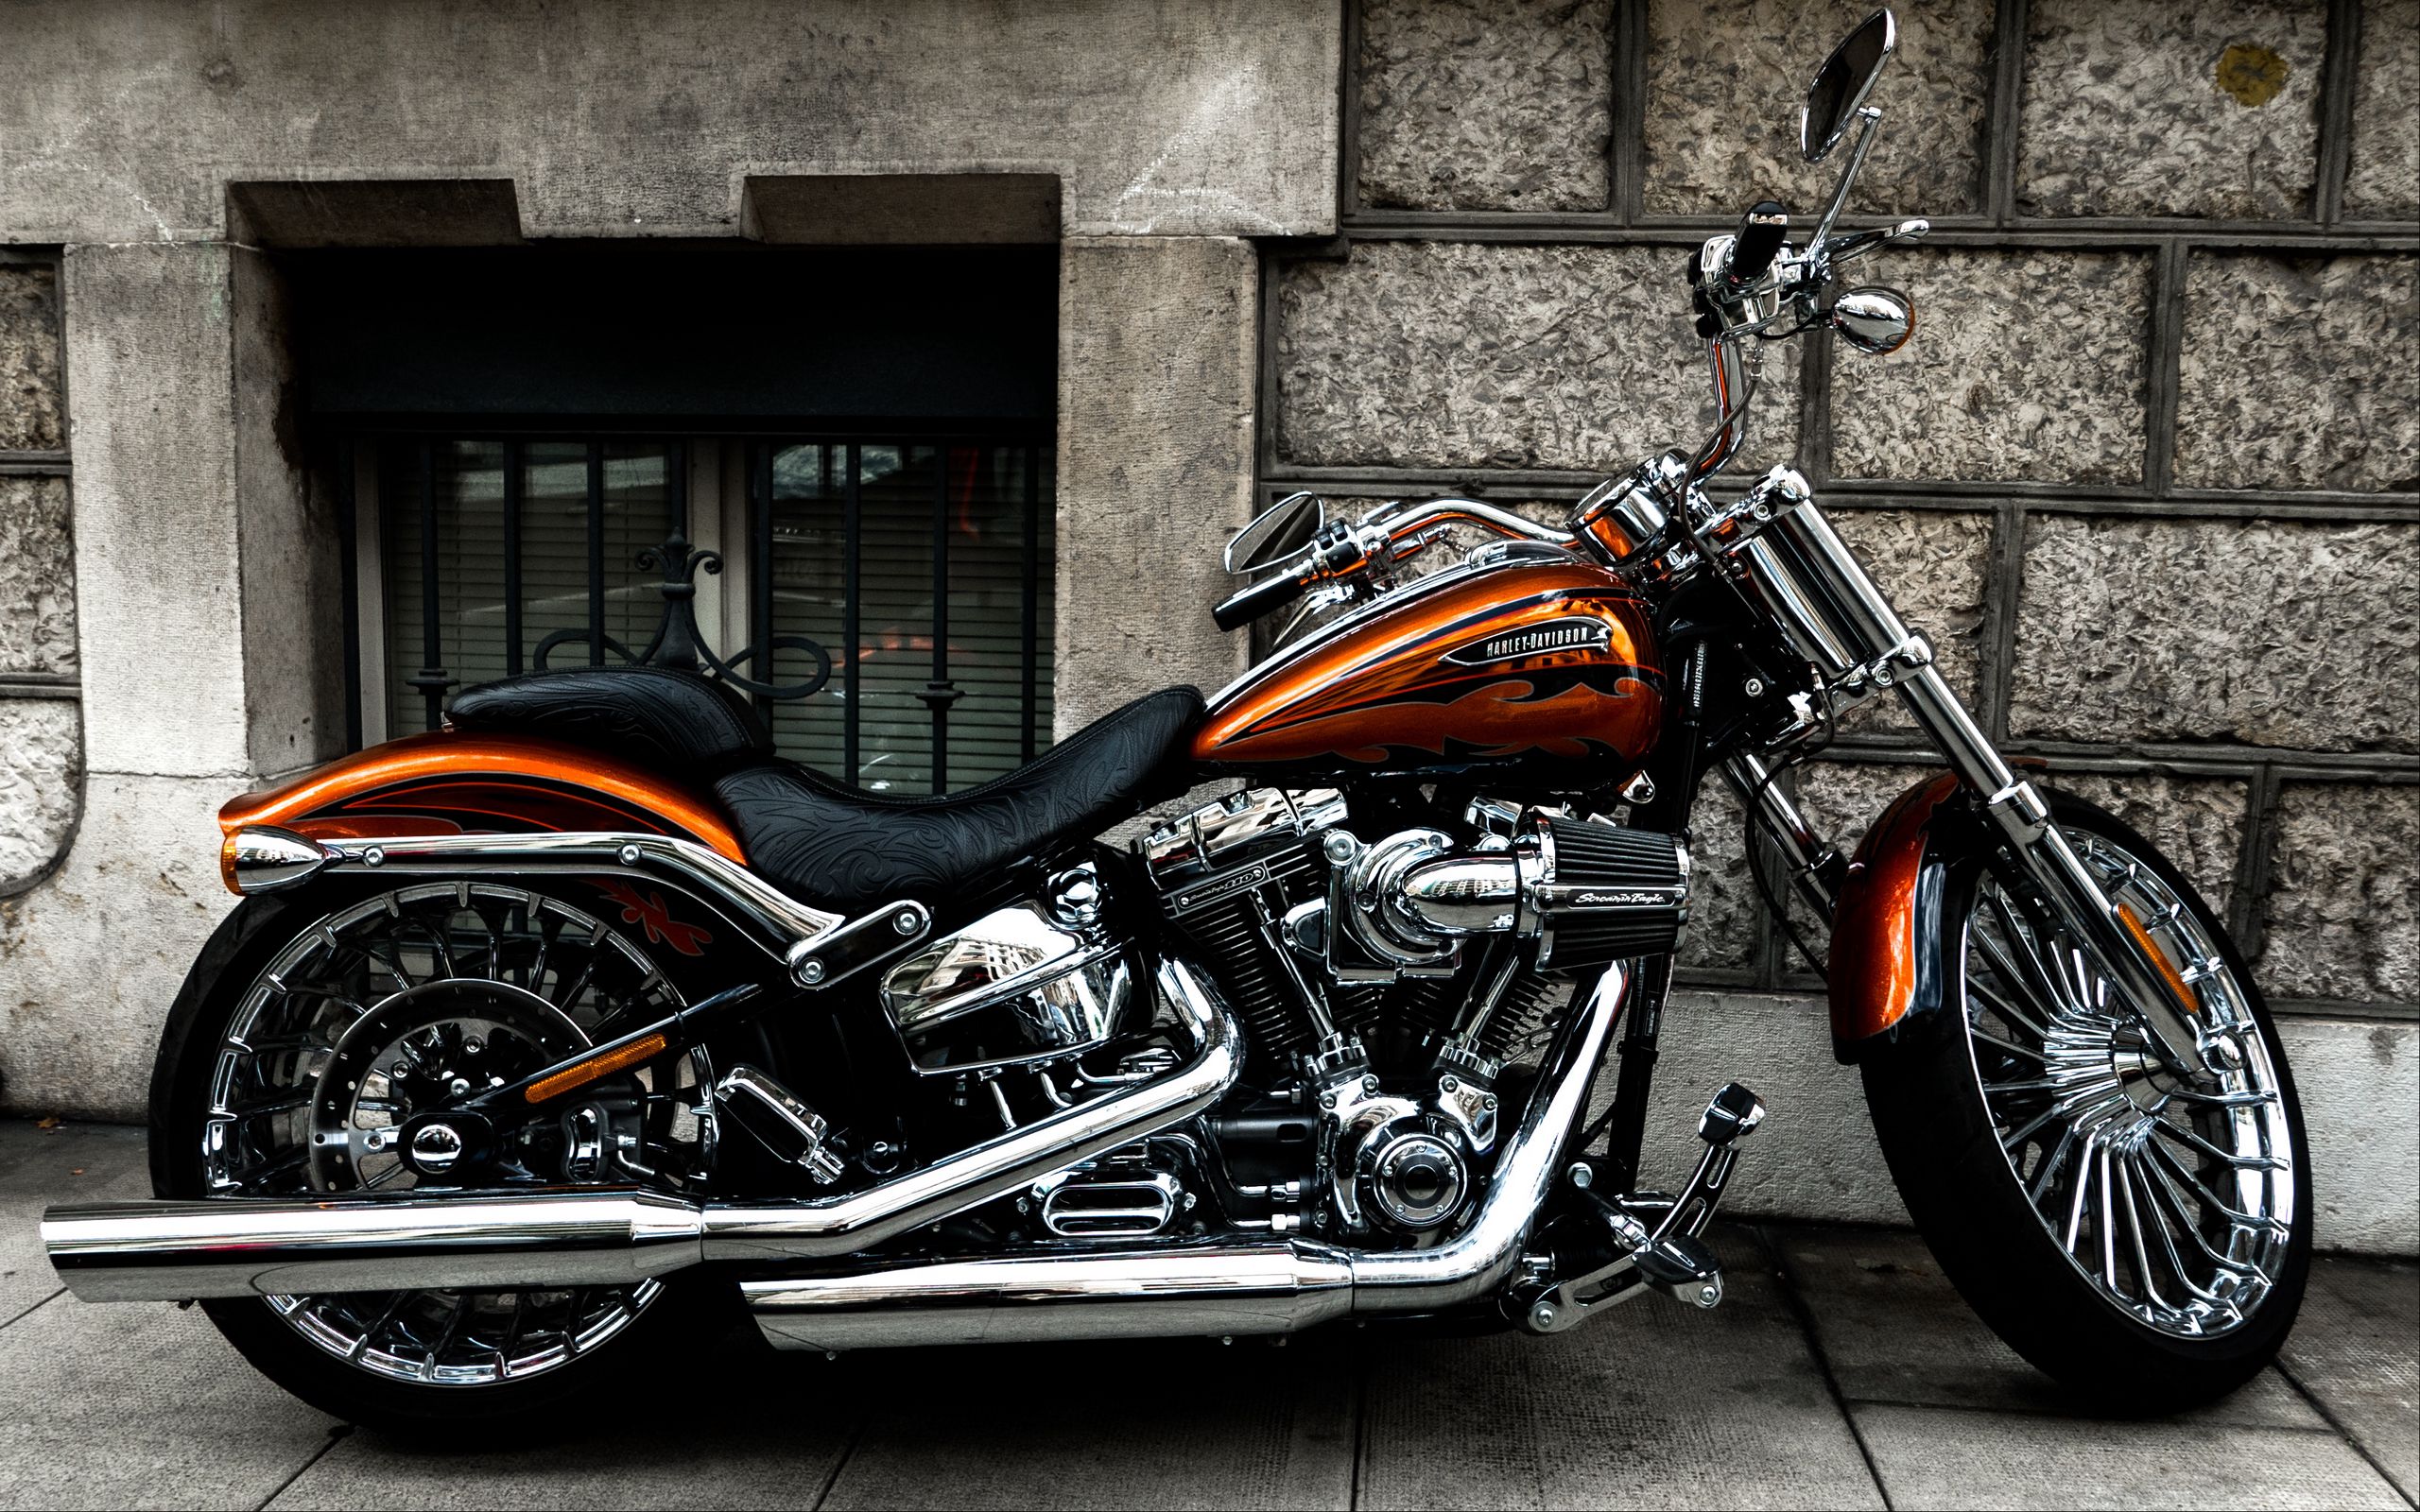 2560x1600 Wallpaper motorcycle, bike, side view, wheel